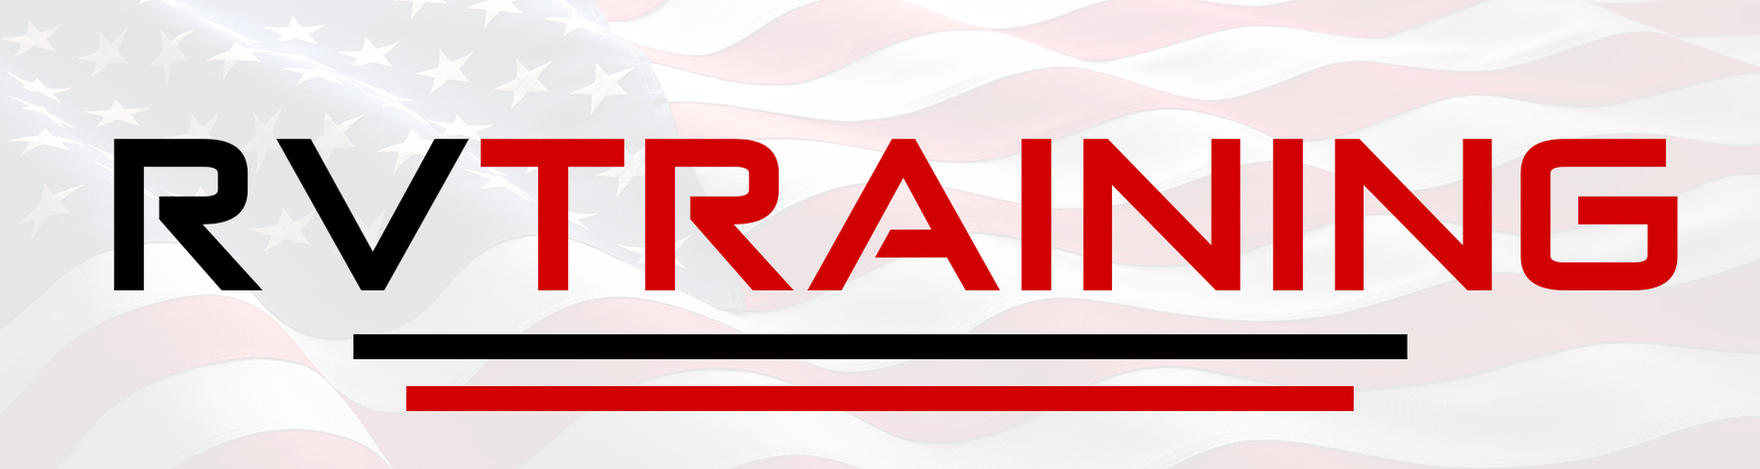 RV Training Banner Image